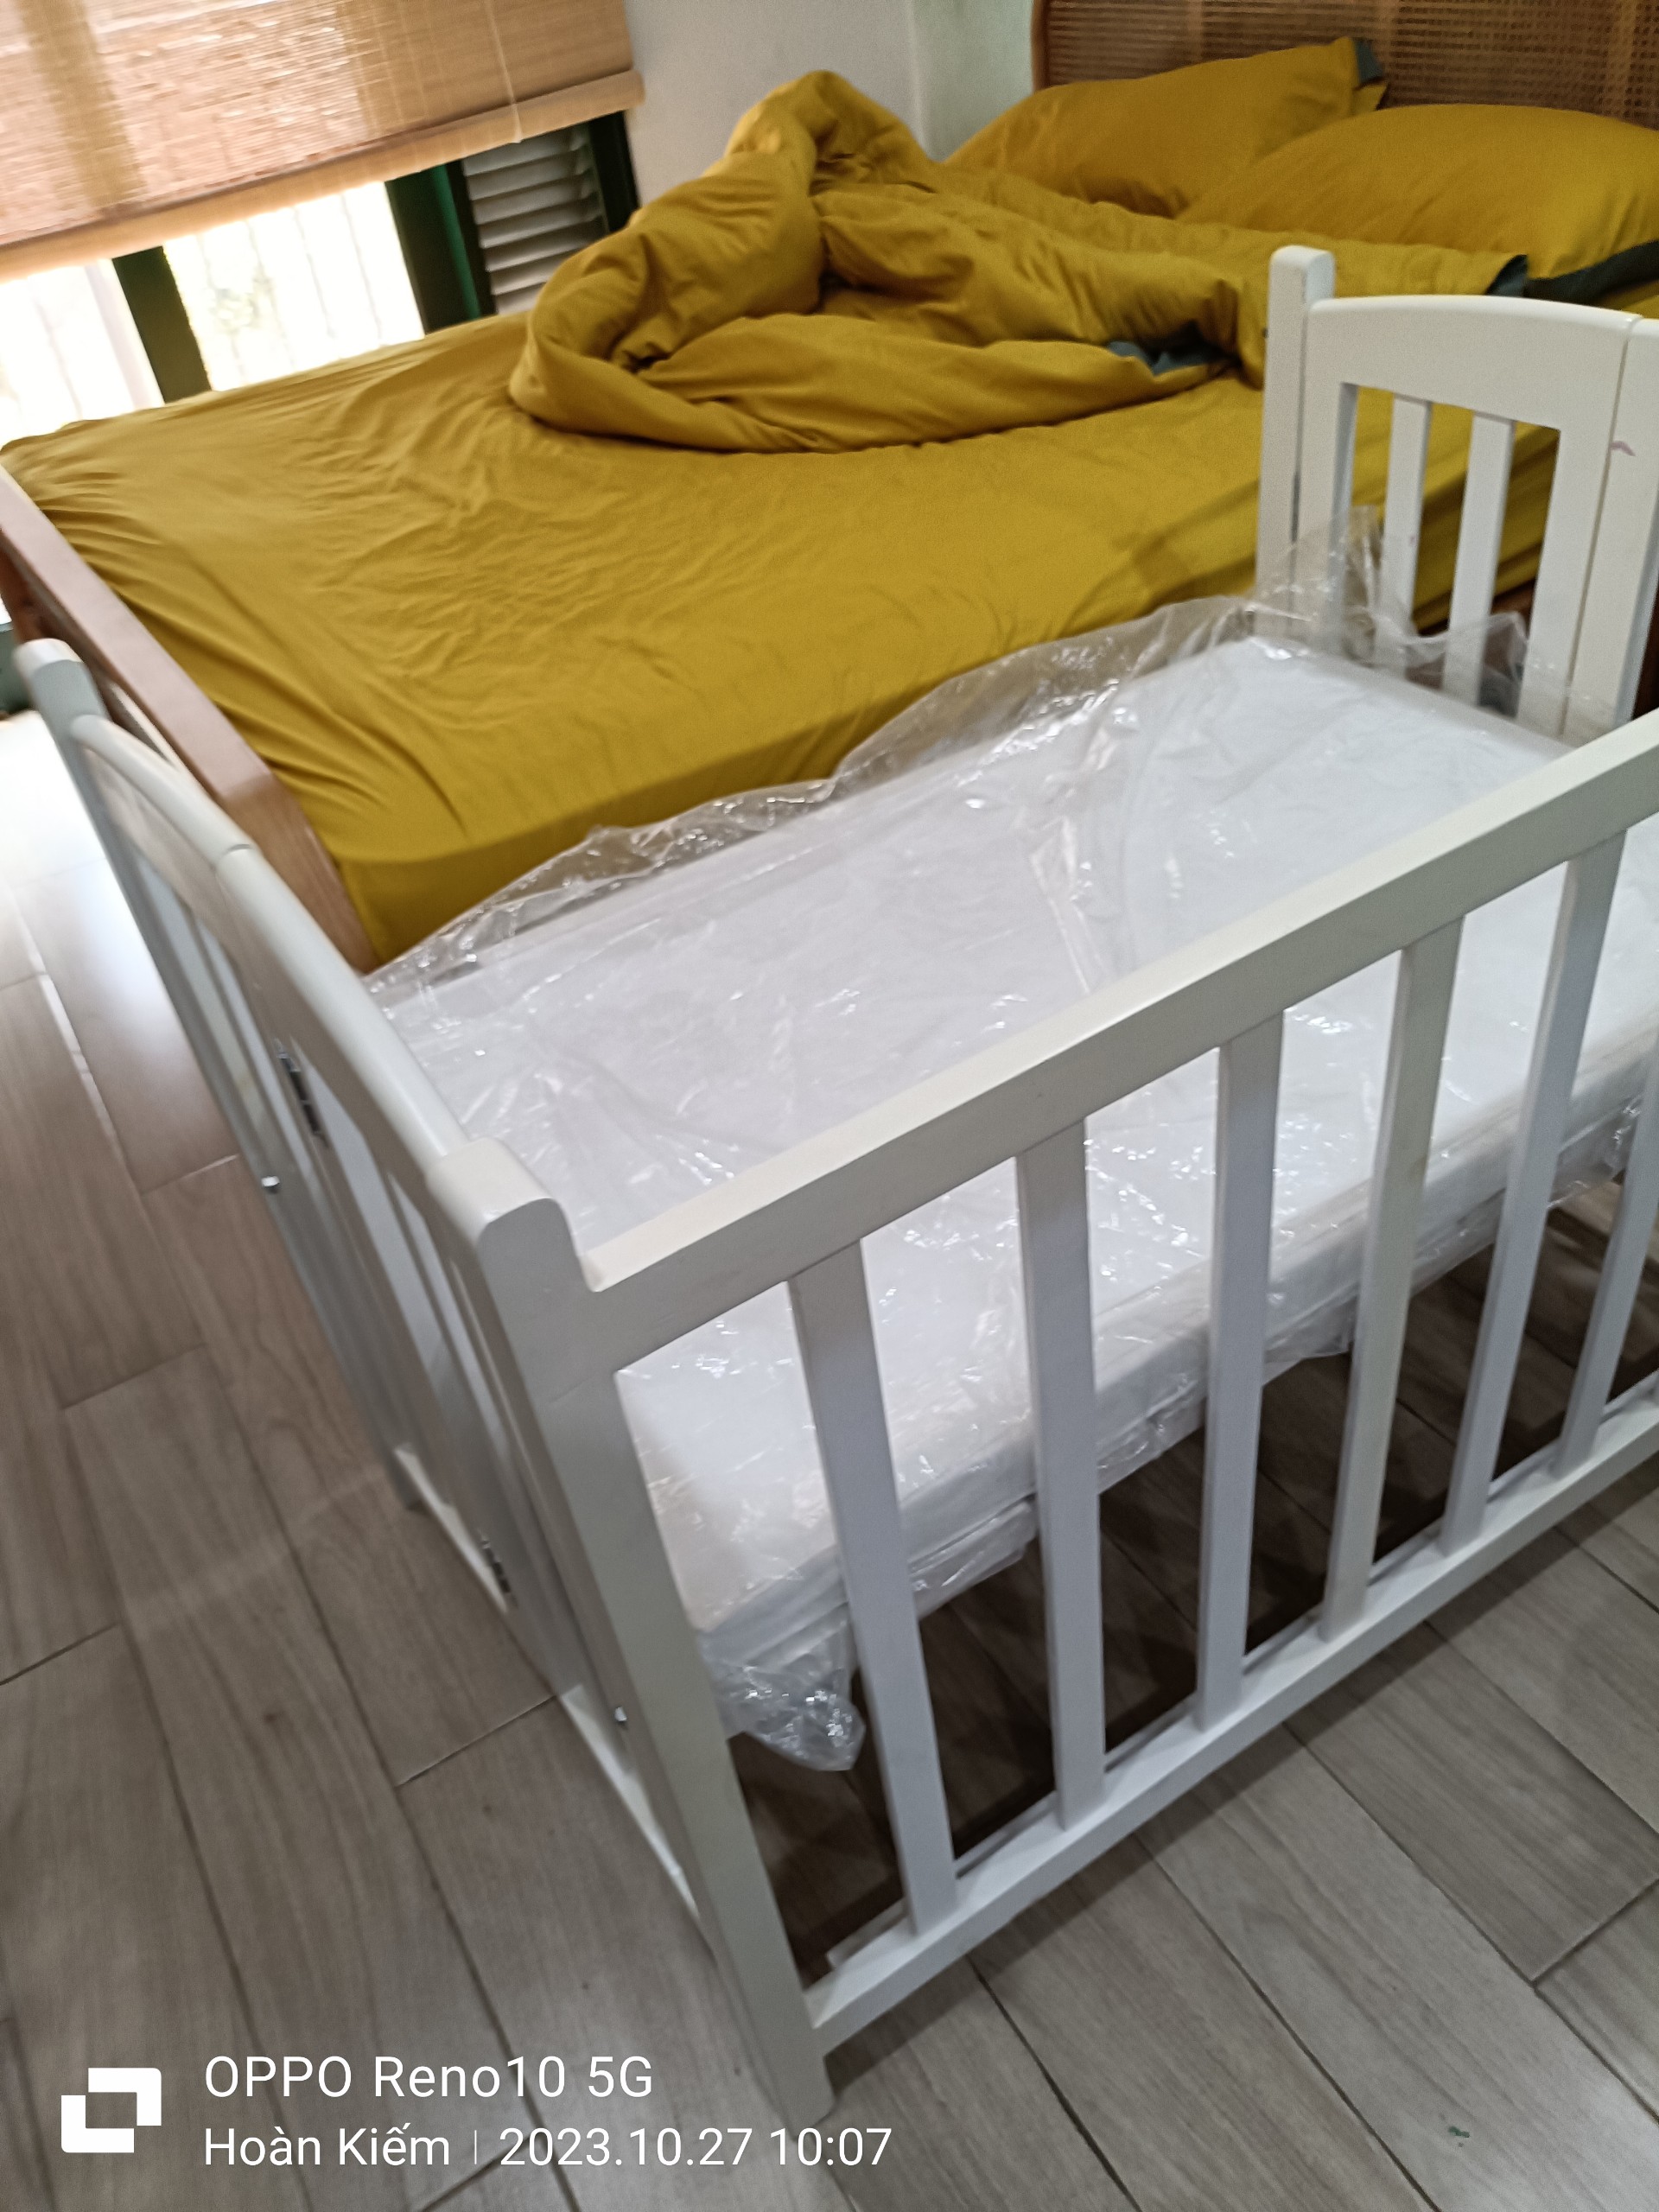 Rental of baby cot